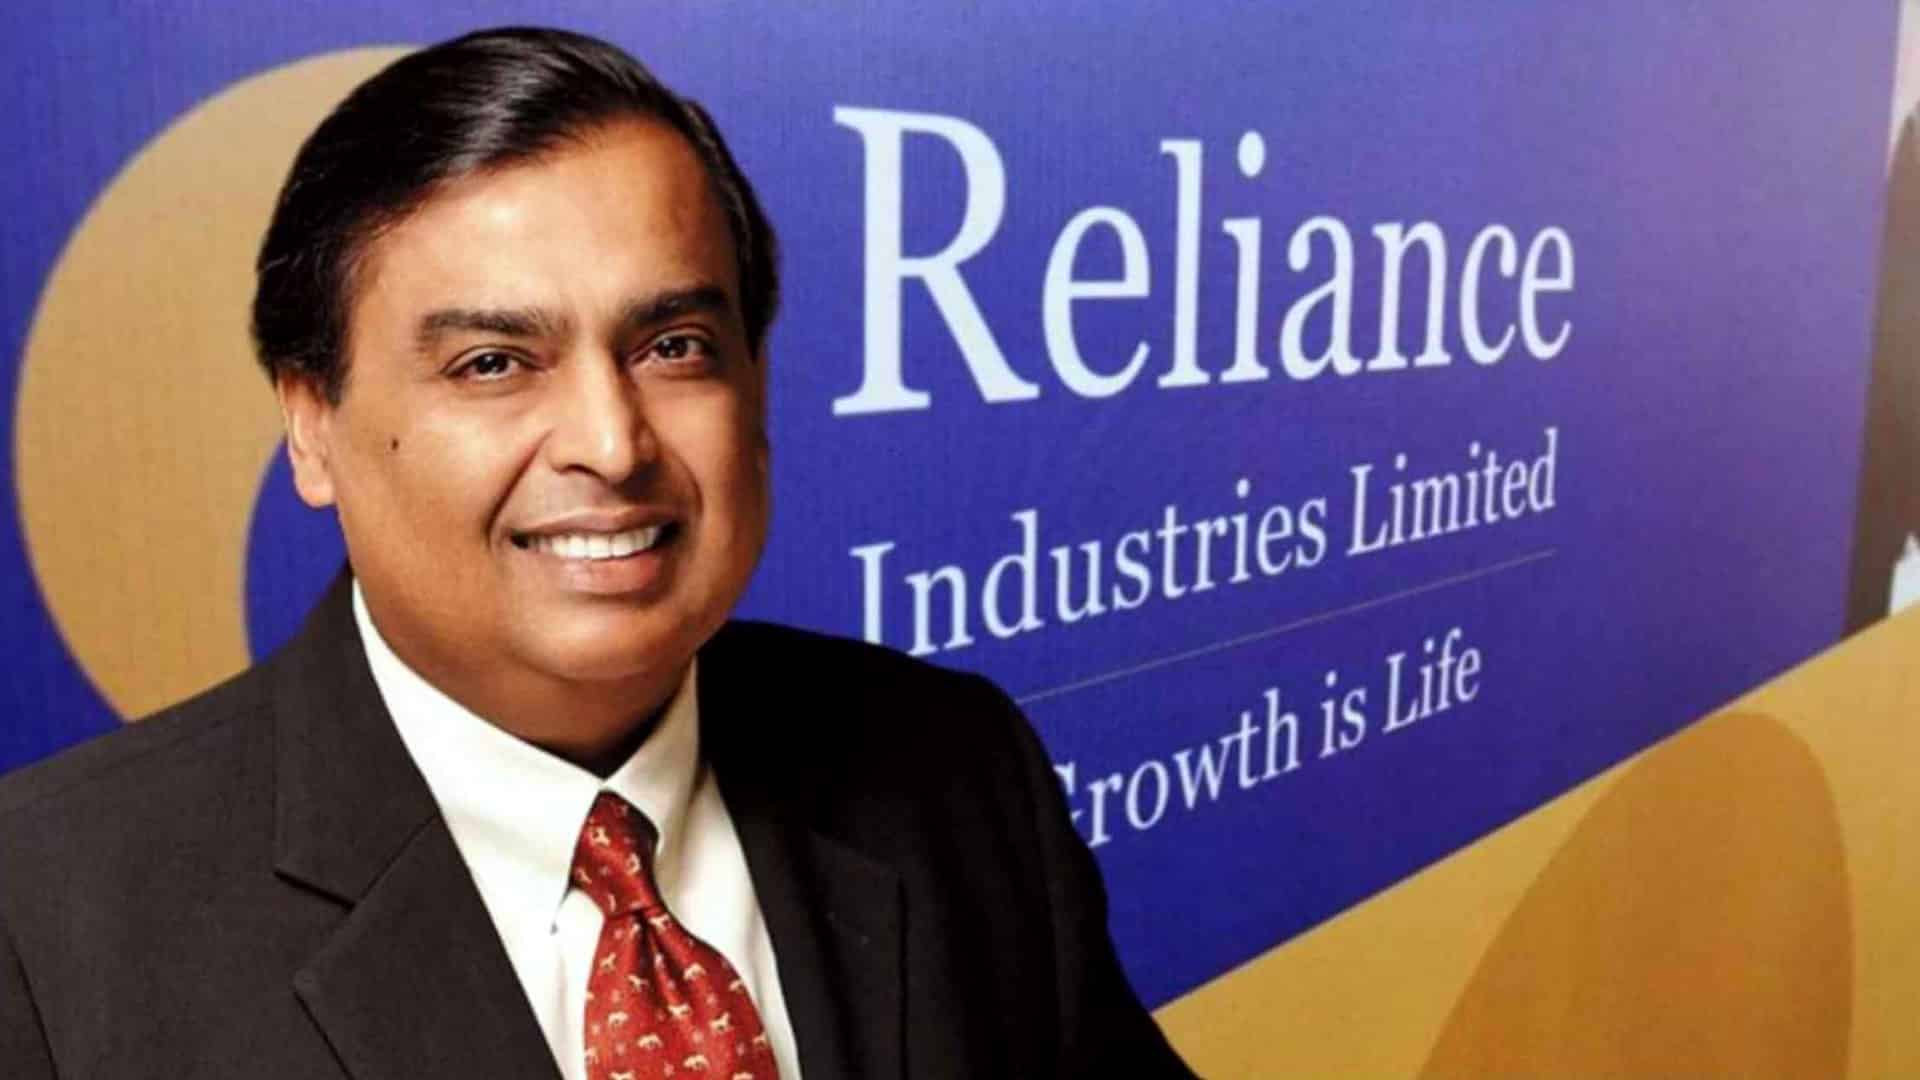 Reliance invested USD 150 bn in last 10 yrs: Mukesh Ambani